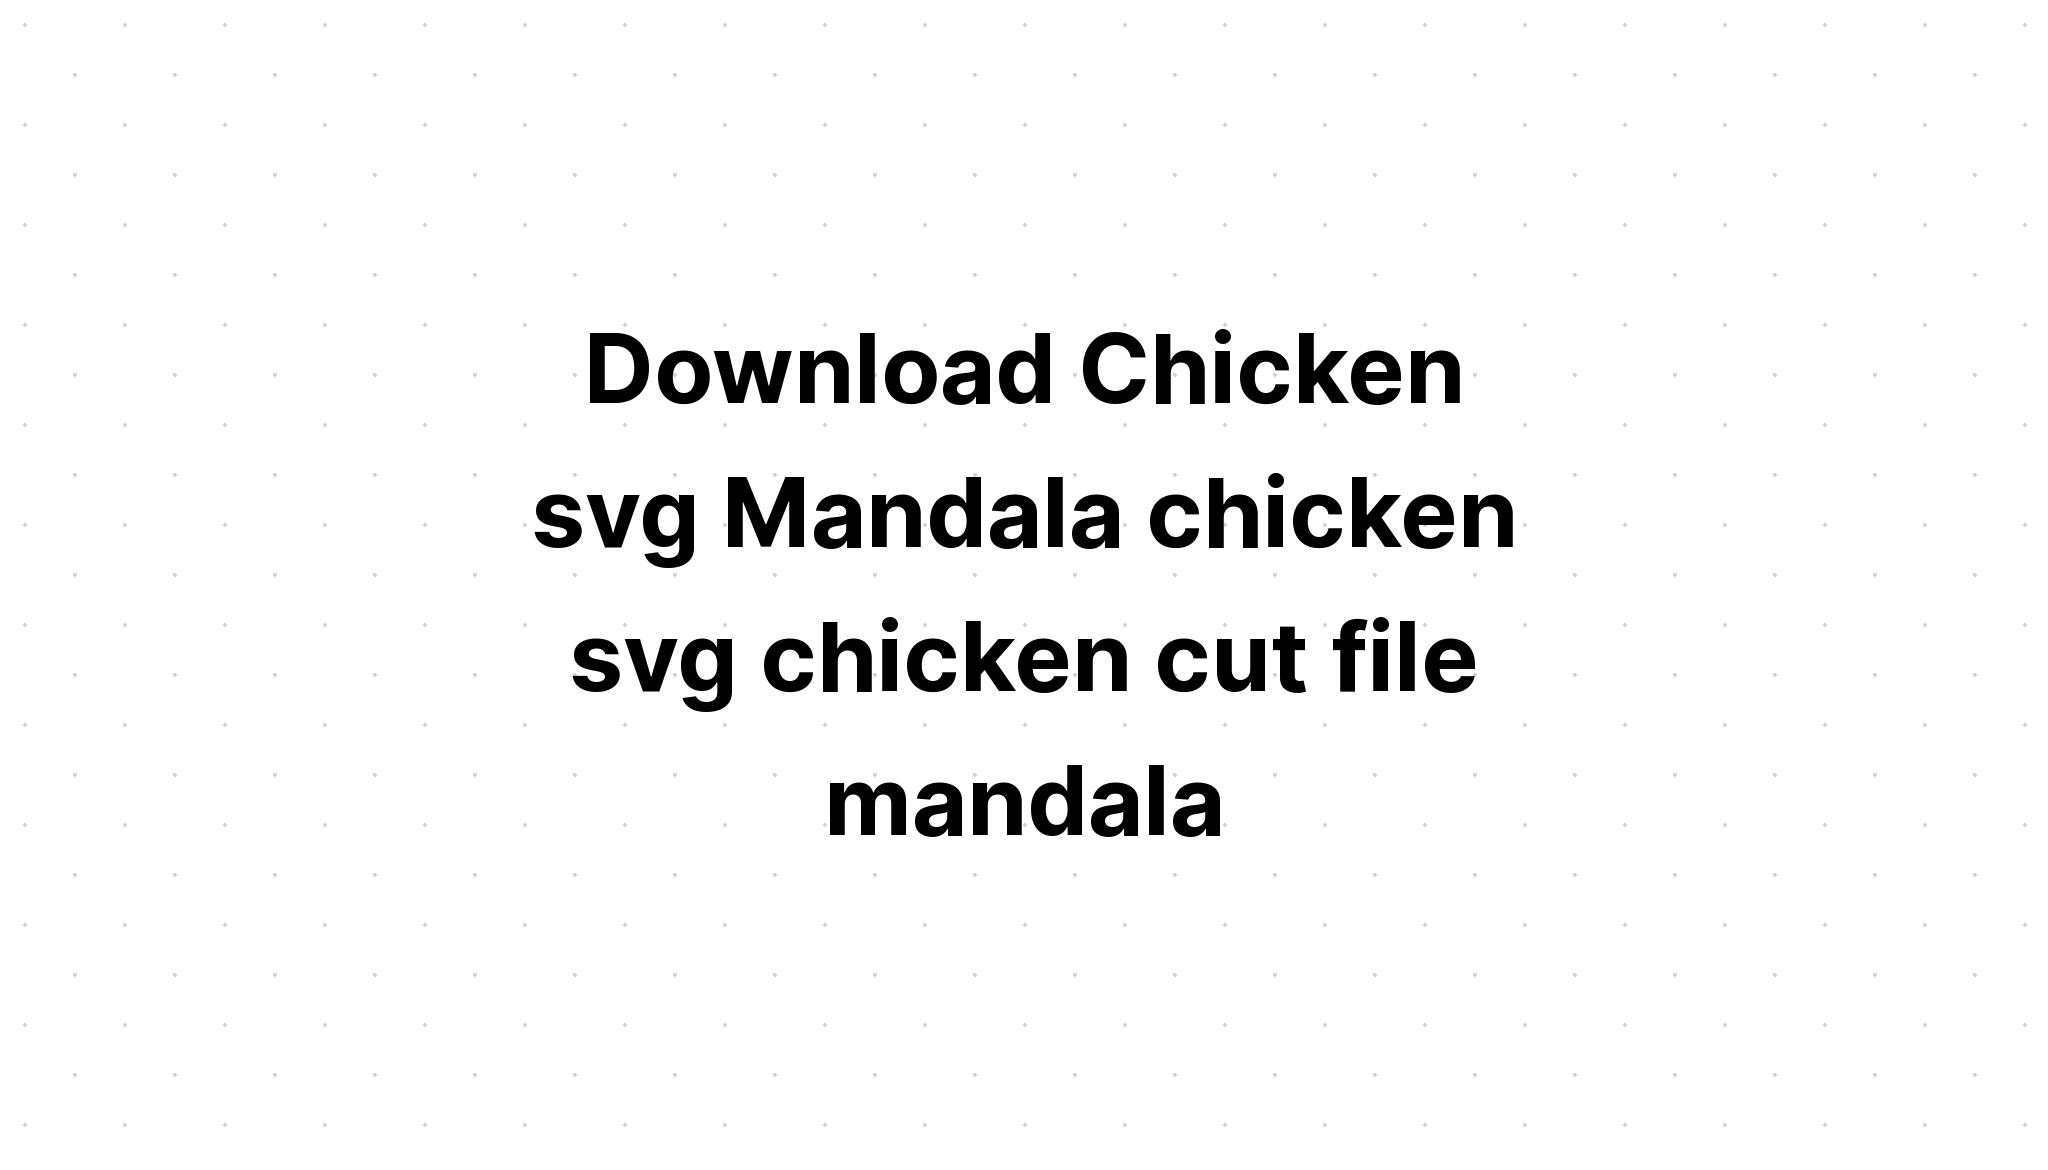 Download Chicken Mandala Svg Free Design - Layered SVG Cut File